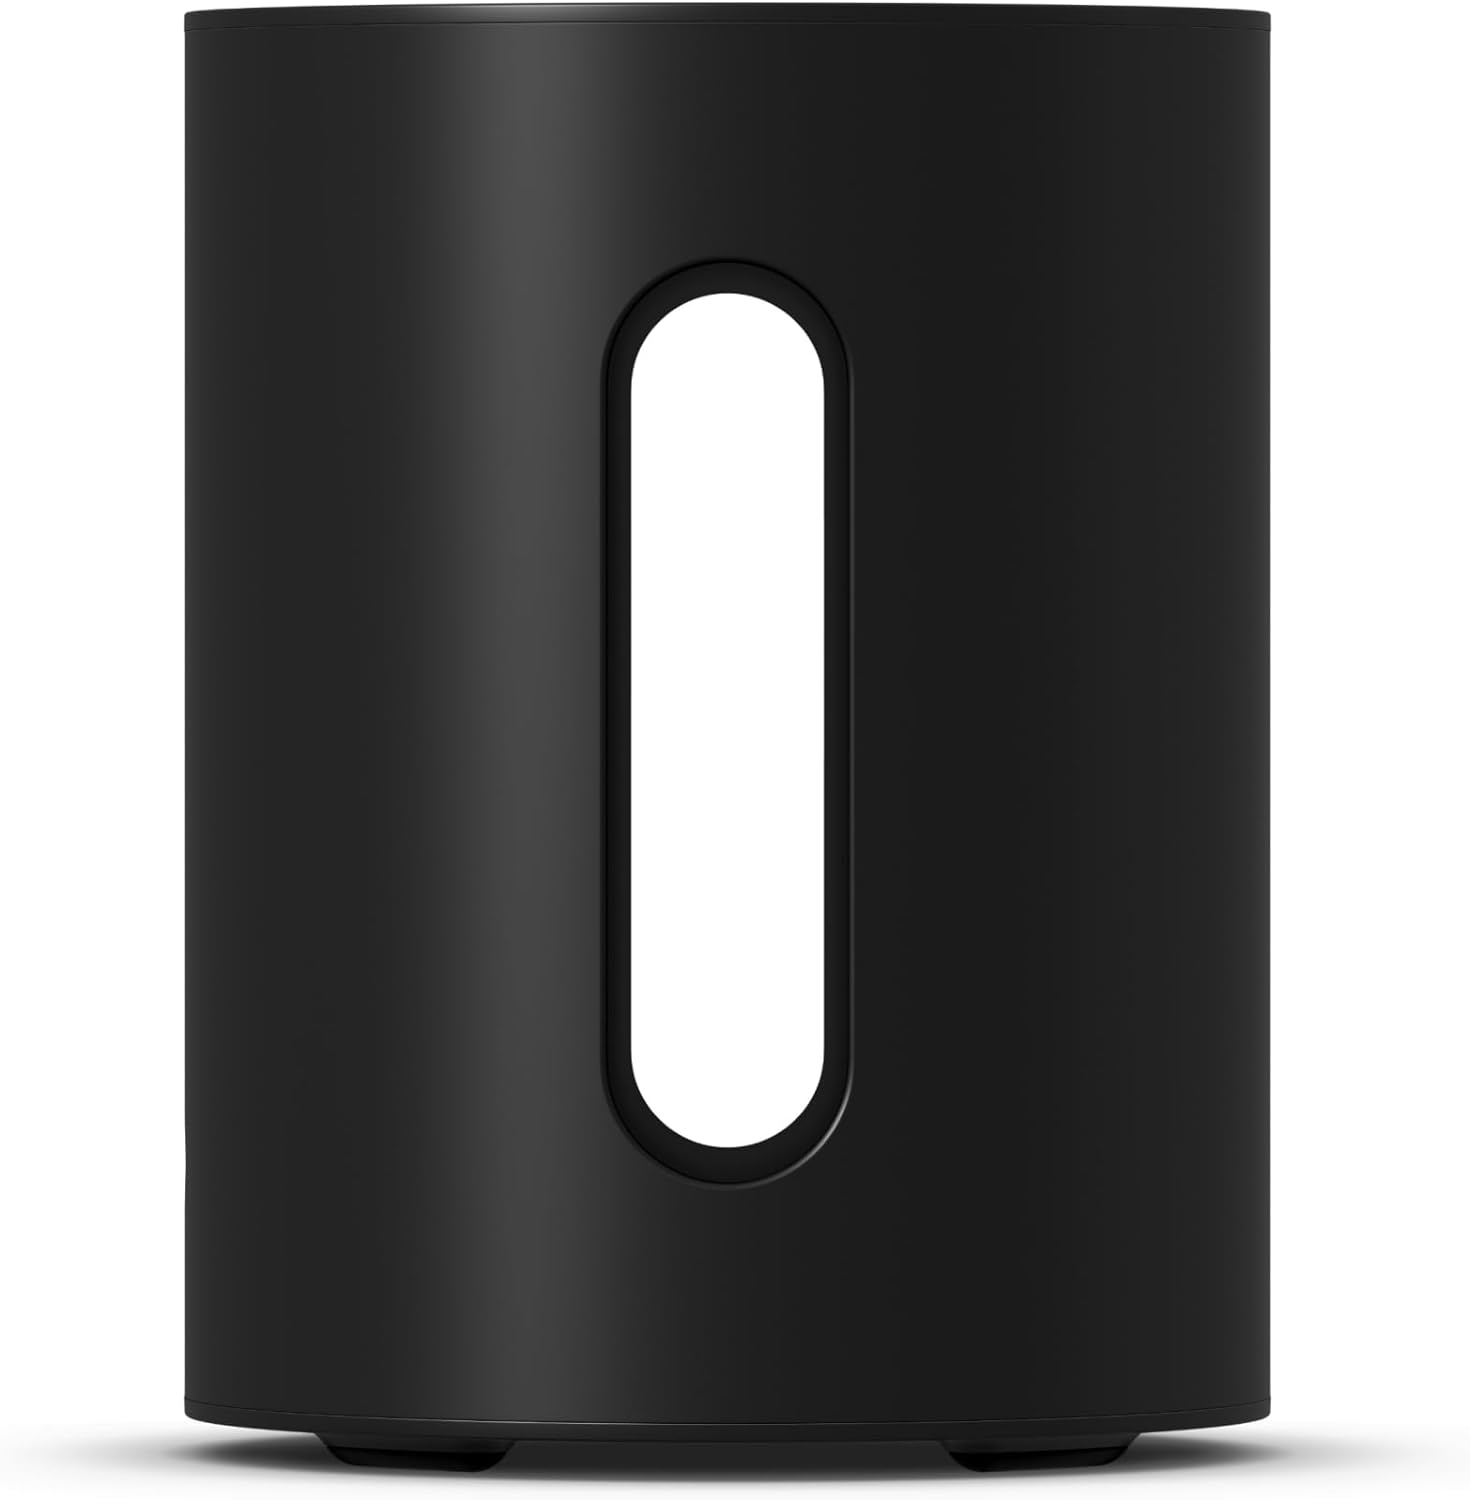 $343.20 - Sonos Sub Mini - Black - Compact Wireless Subwoofer - at Amazon